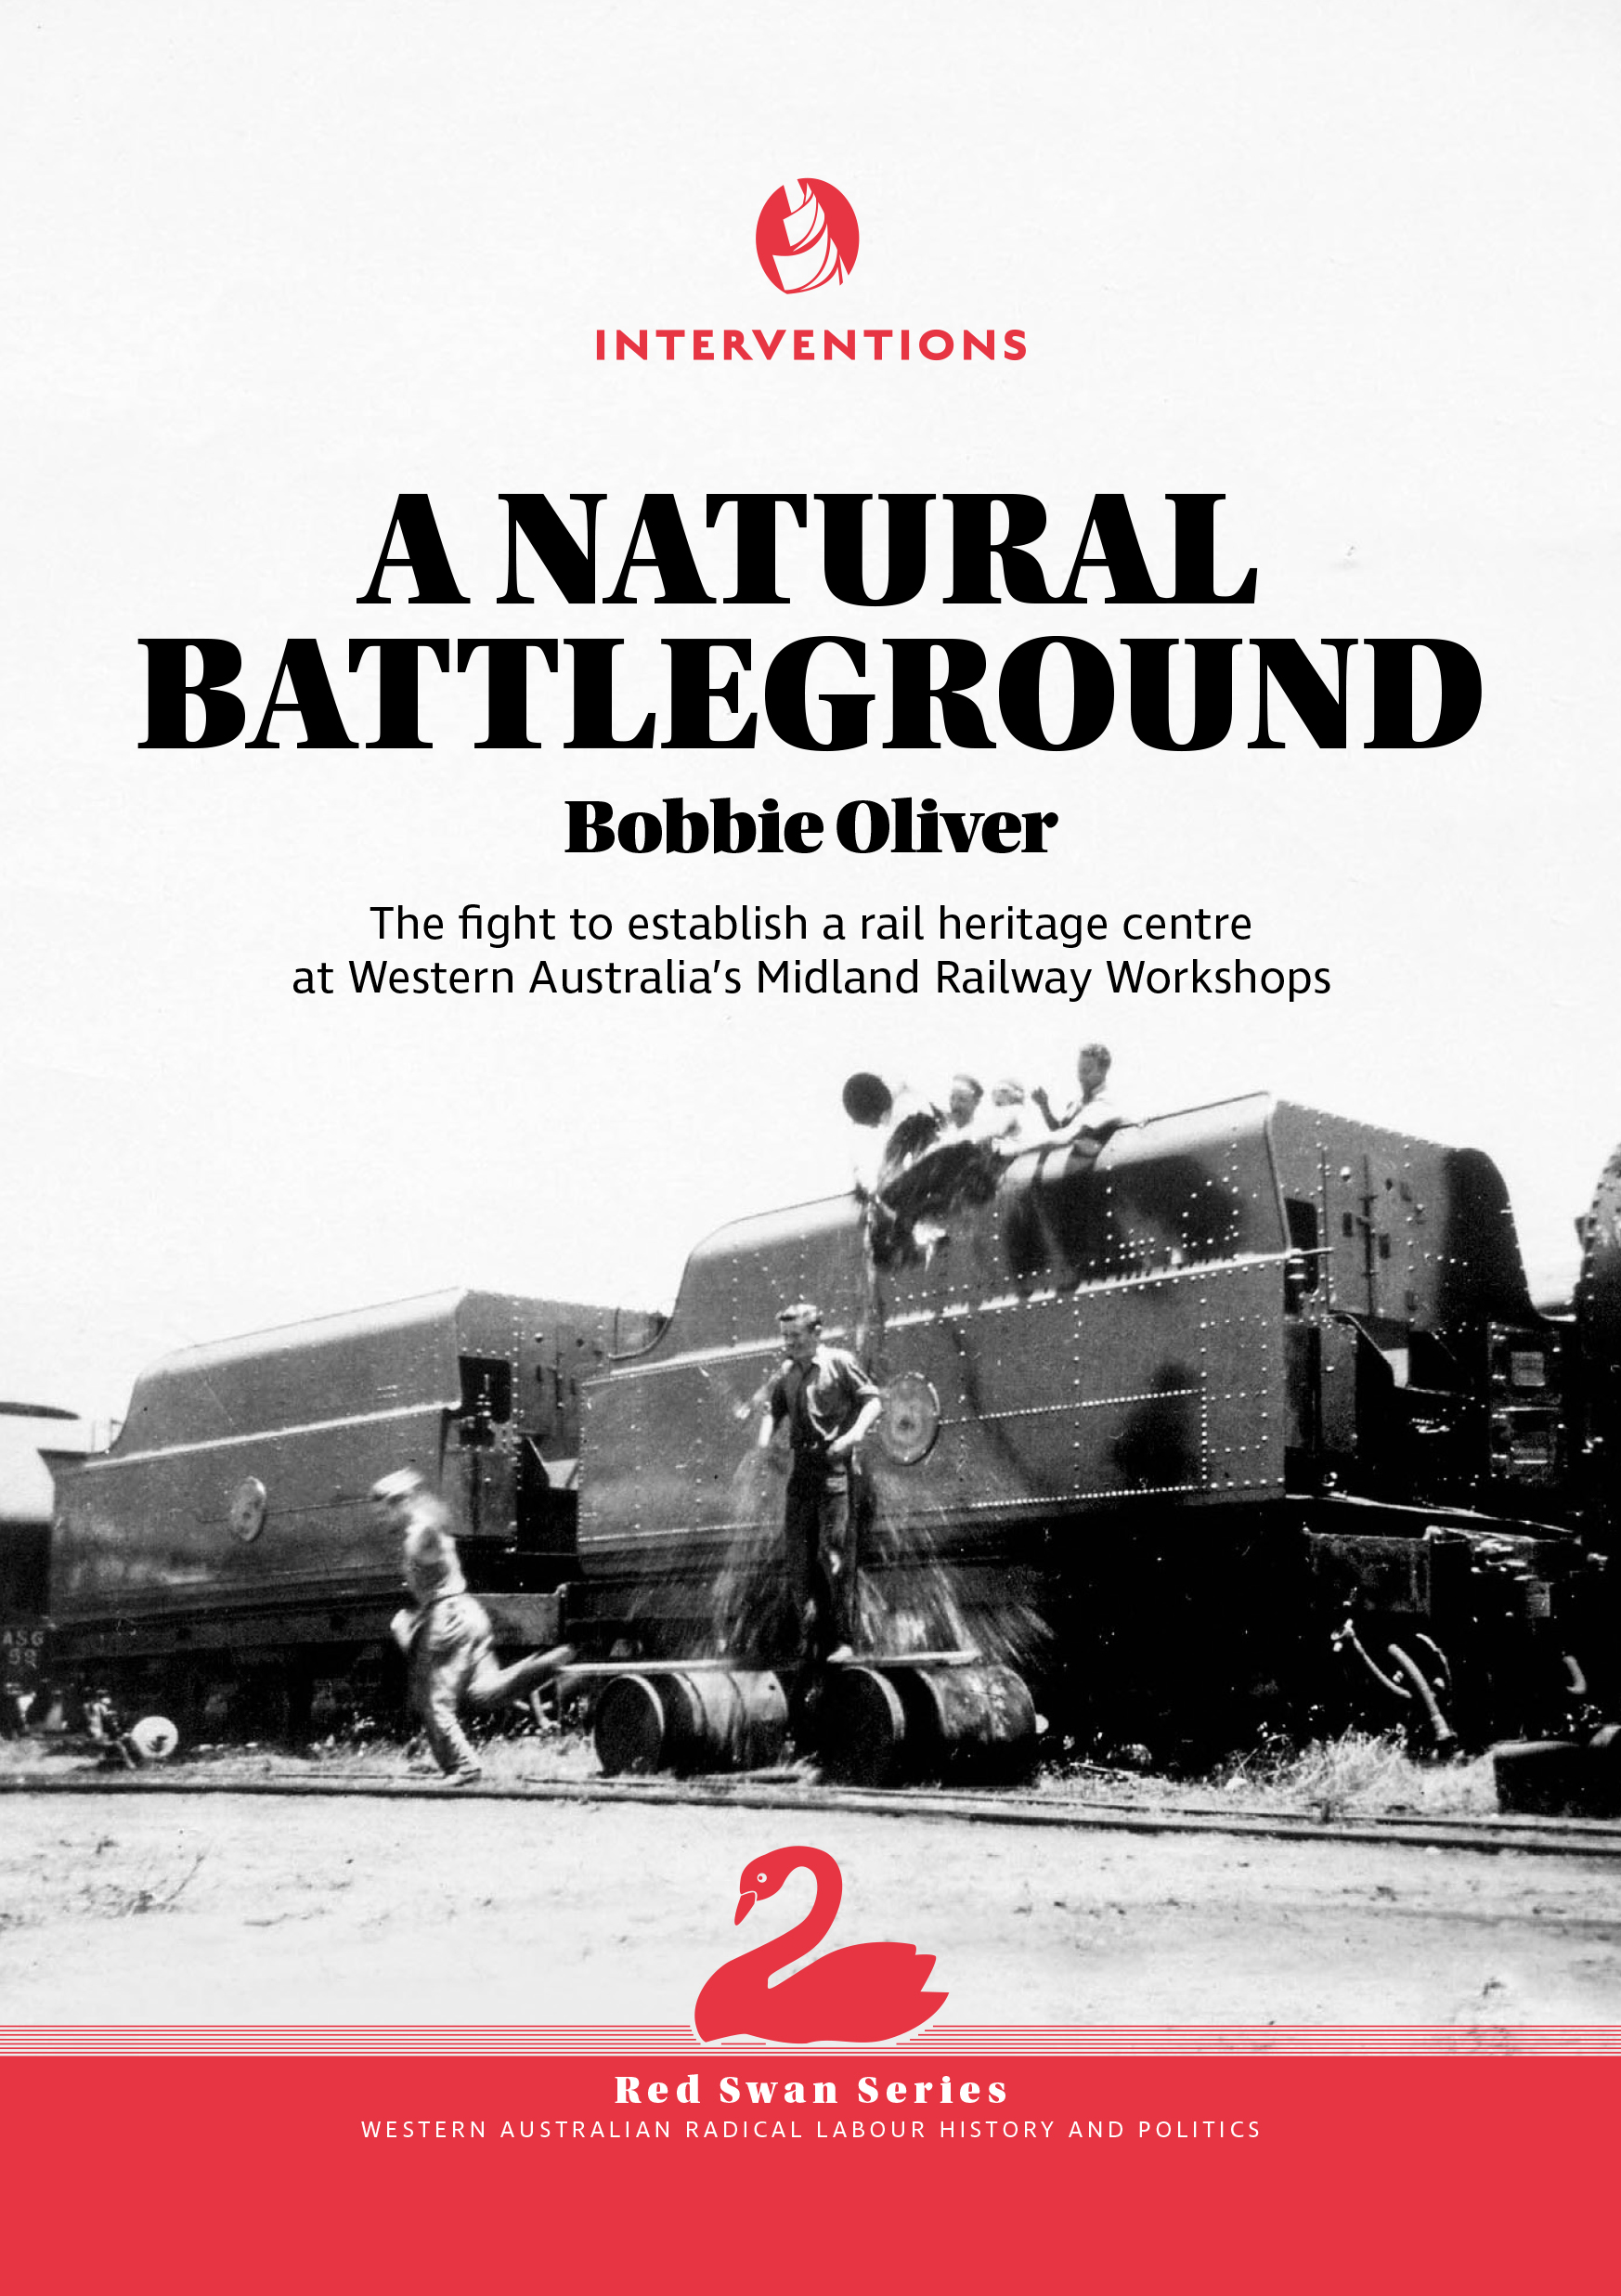 A Natural Battleground by Bobbie Oliver (image)